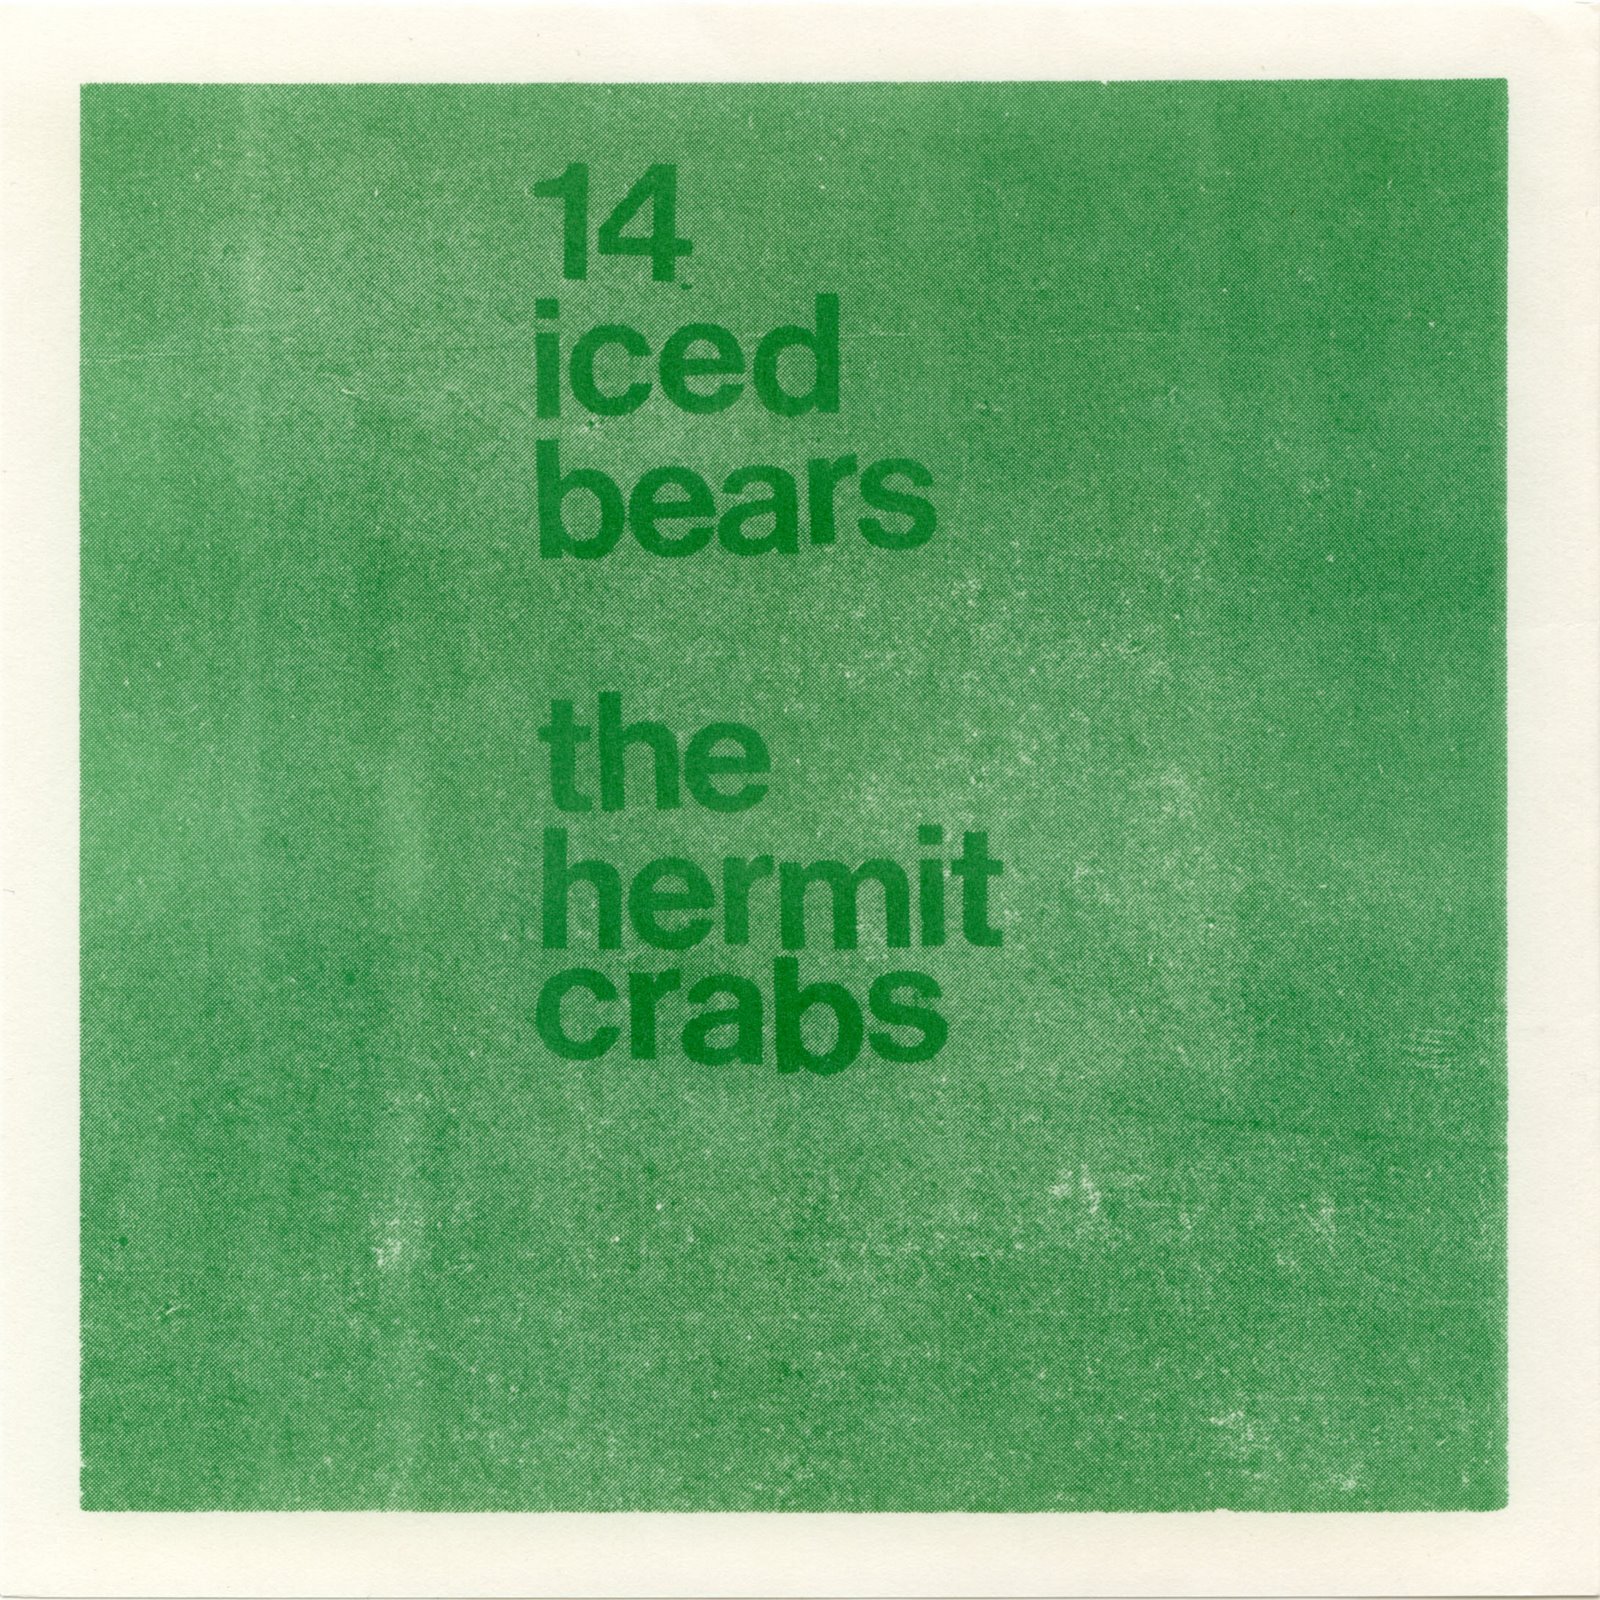 [14+iced+bears-hermit+crabs+front-1987.jpg]